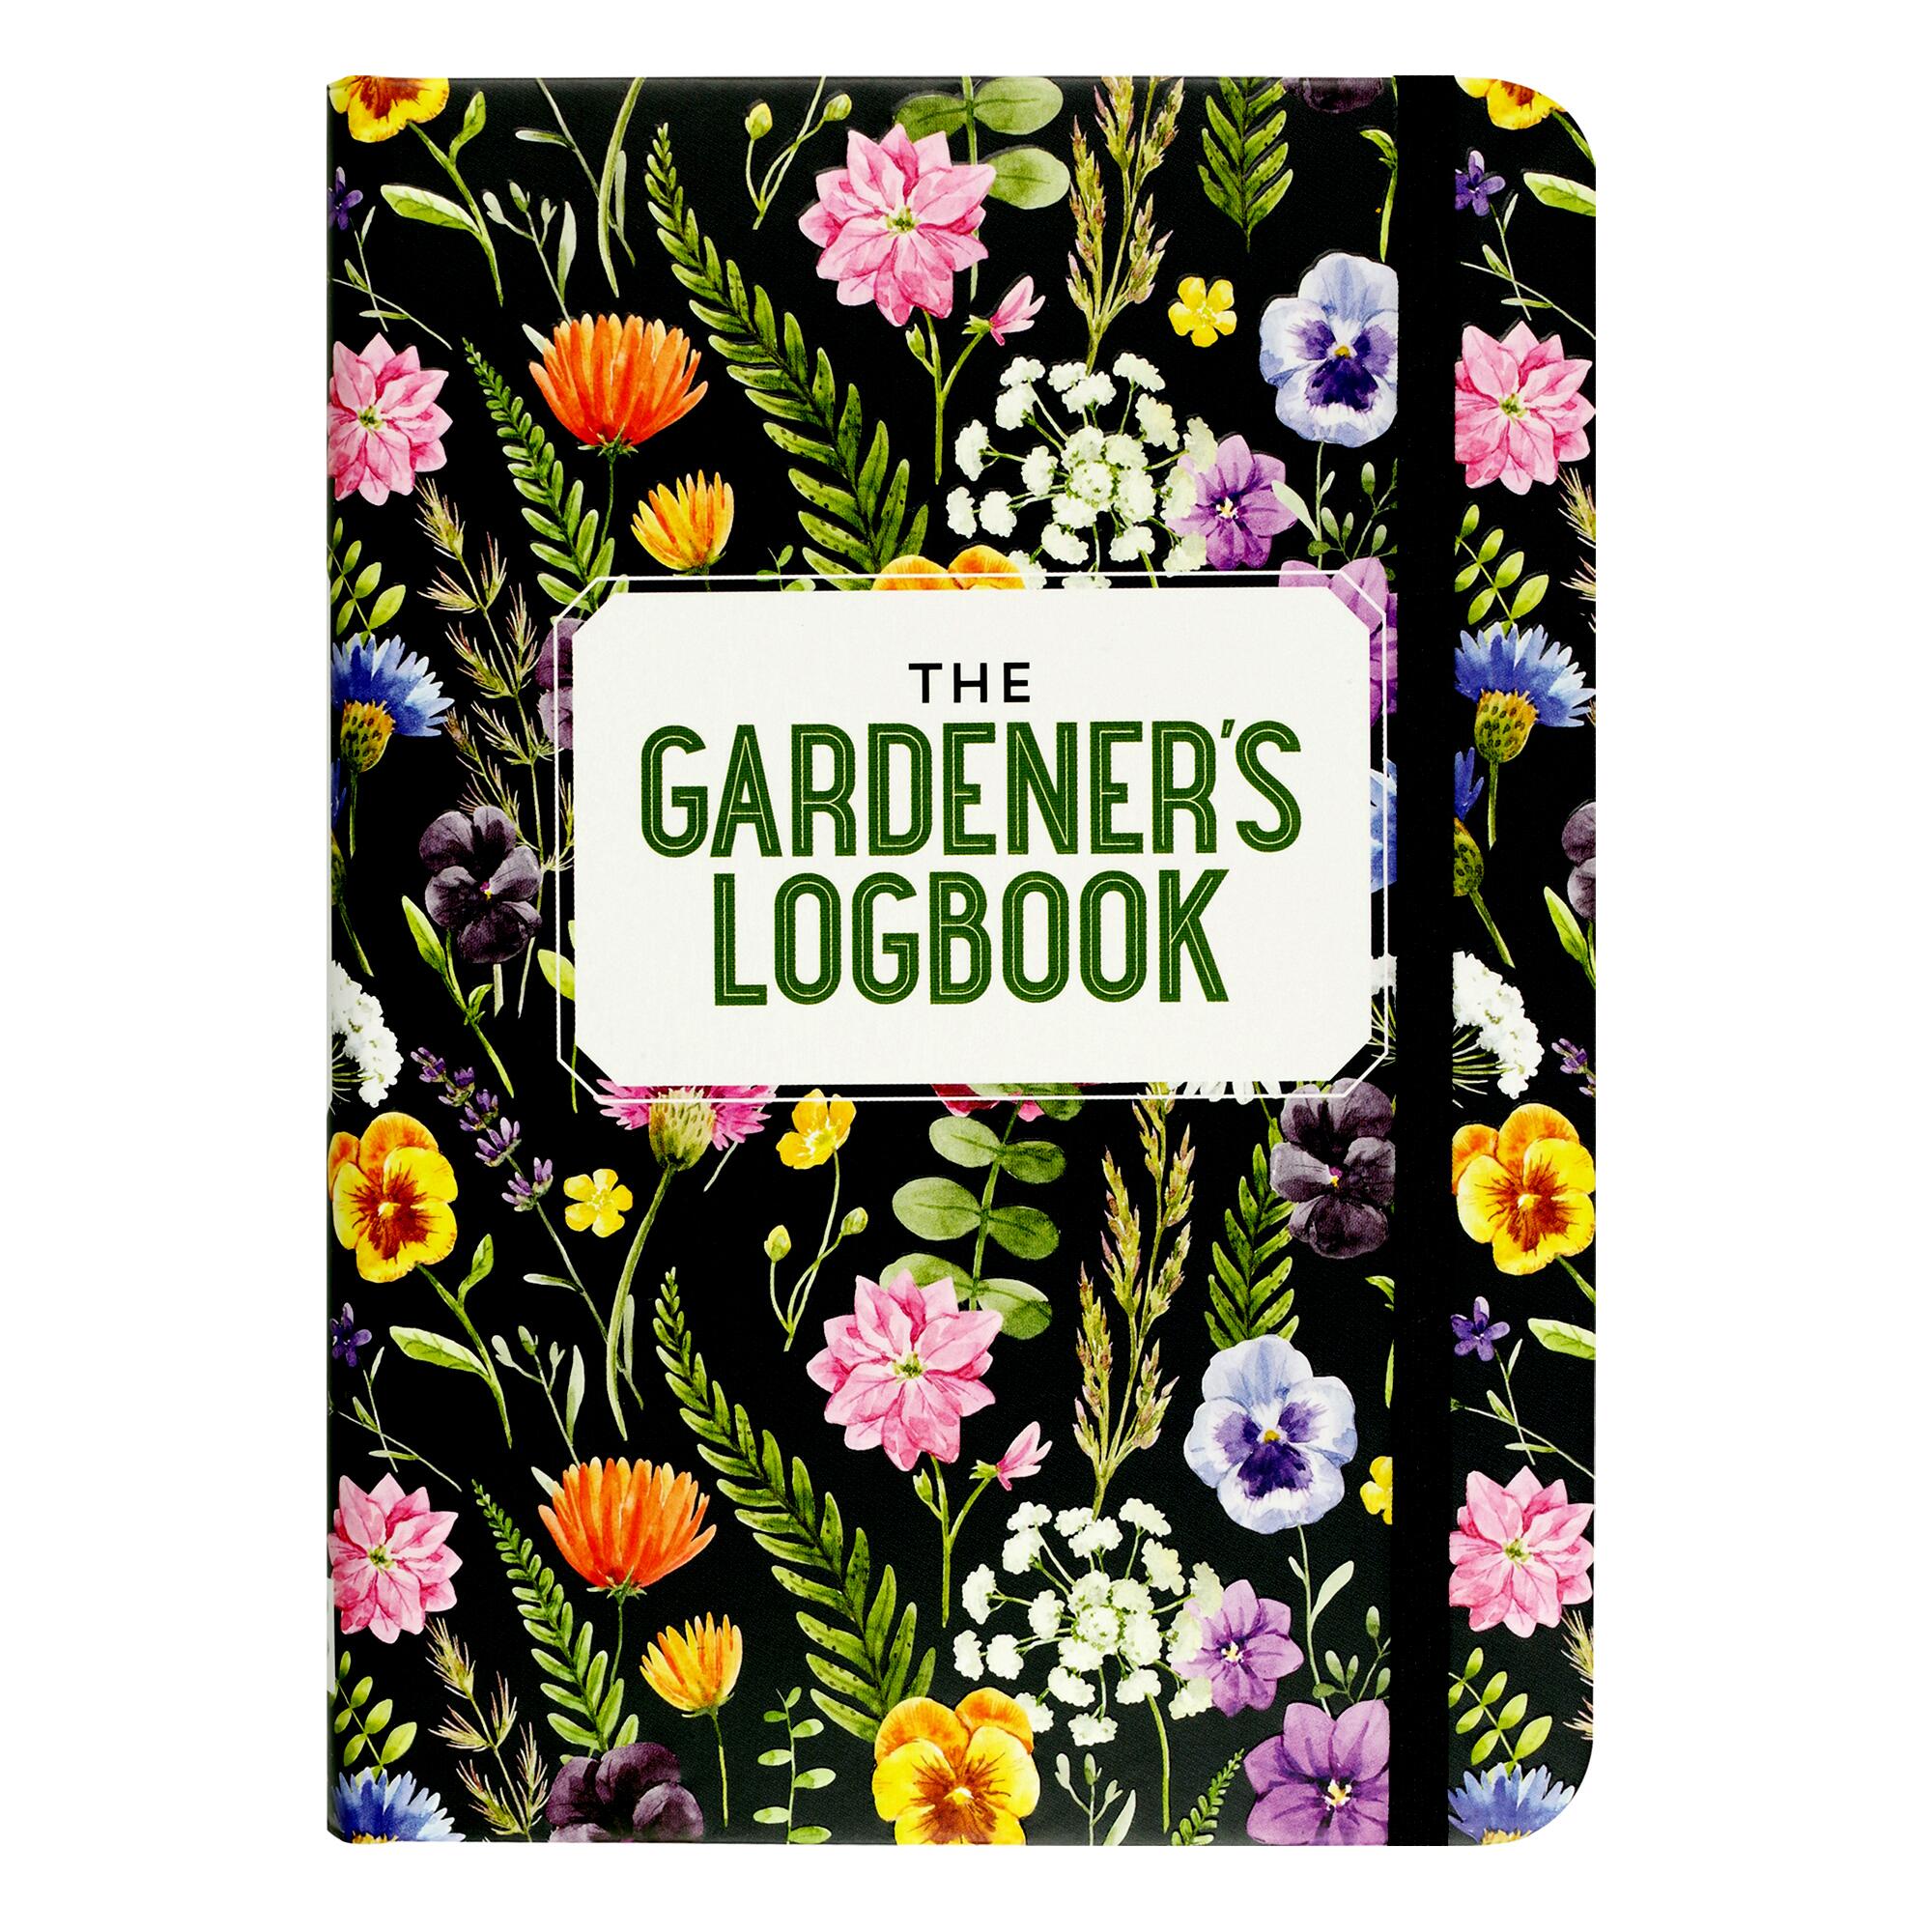 The Gardener's Logbook from Peter Pauper Press.